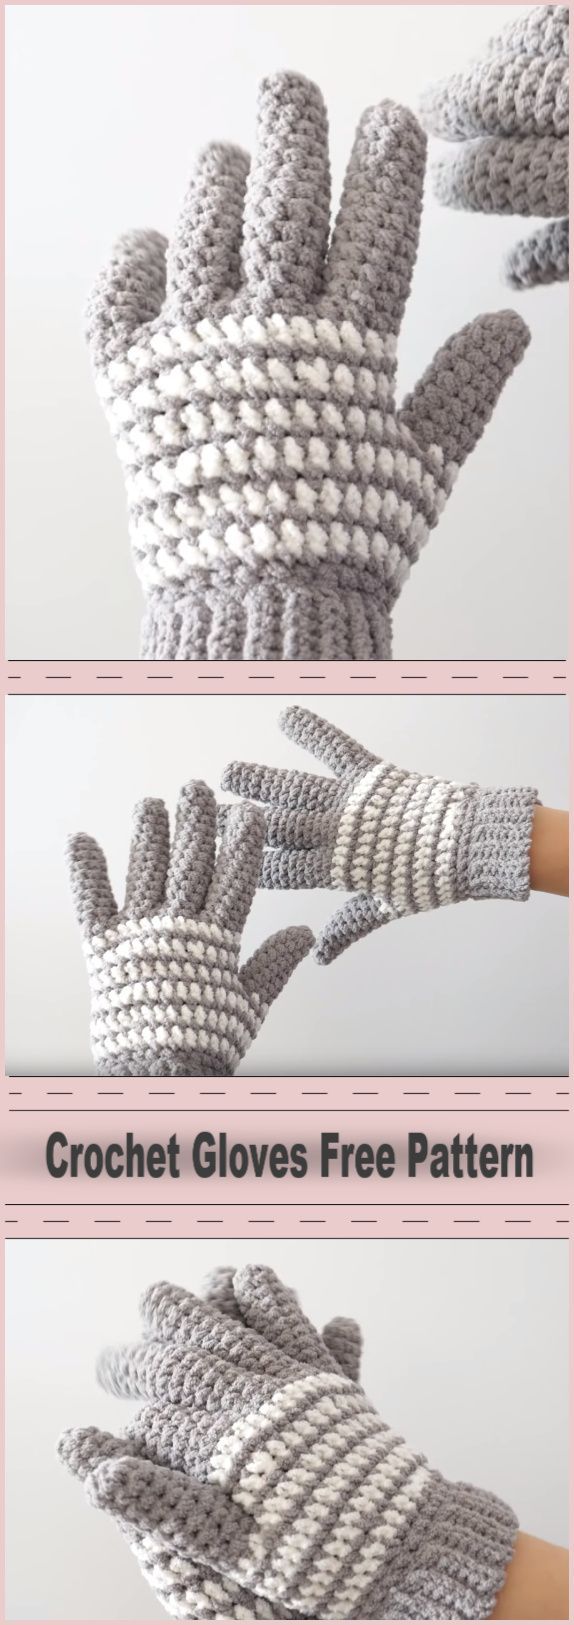 Crochet Gloves Free Pattern – Things To Crochet